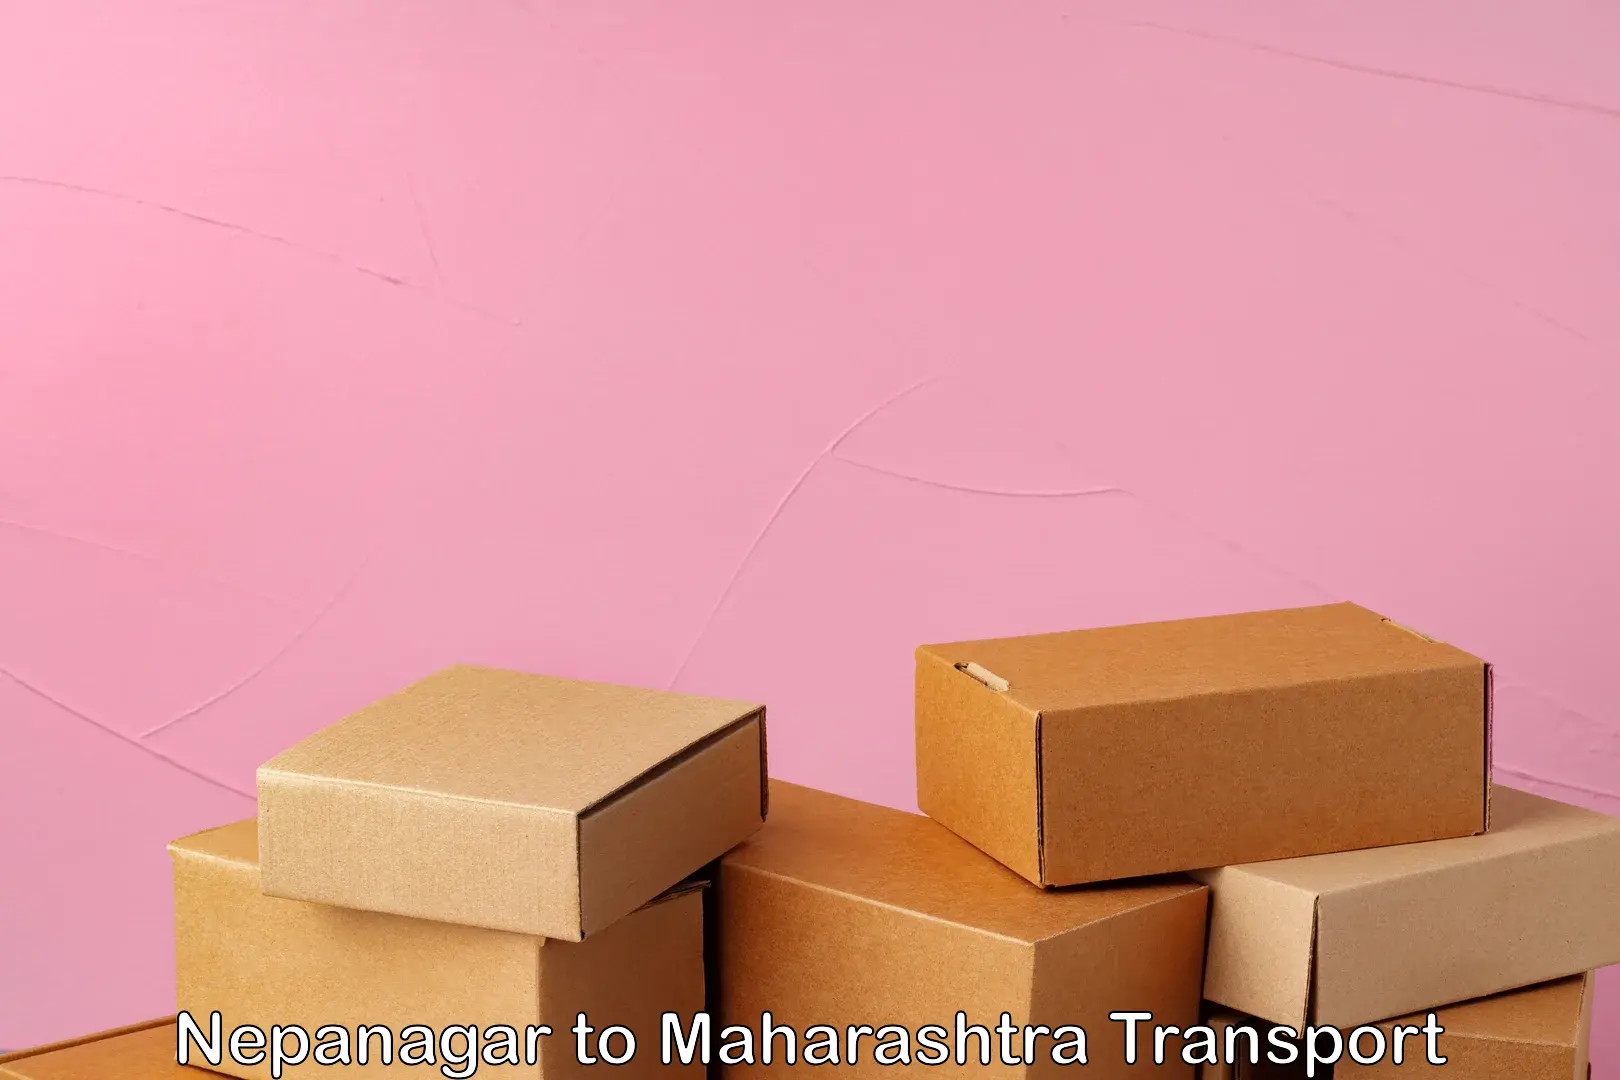 Truck transport companies in India Nepanagar to Maharashtra